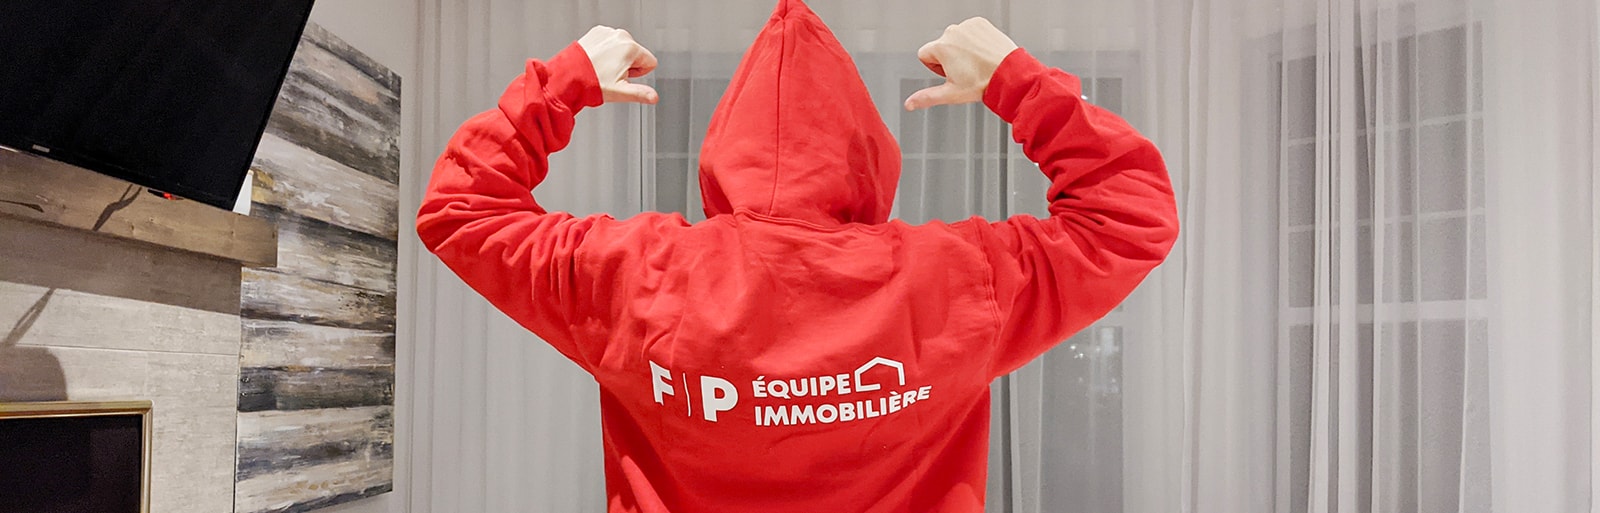 Équipe Immobilière F+P